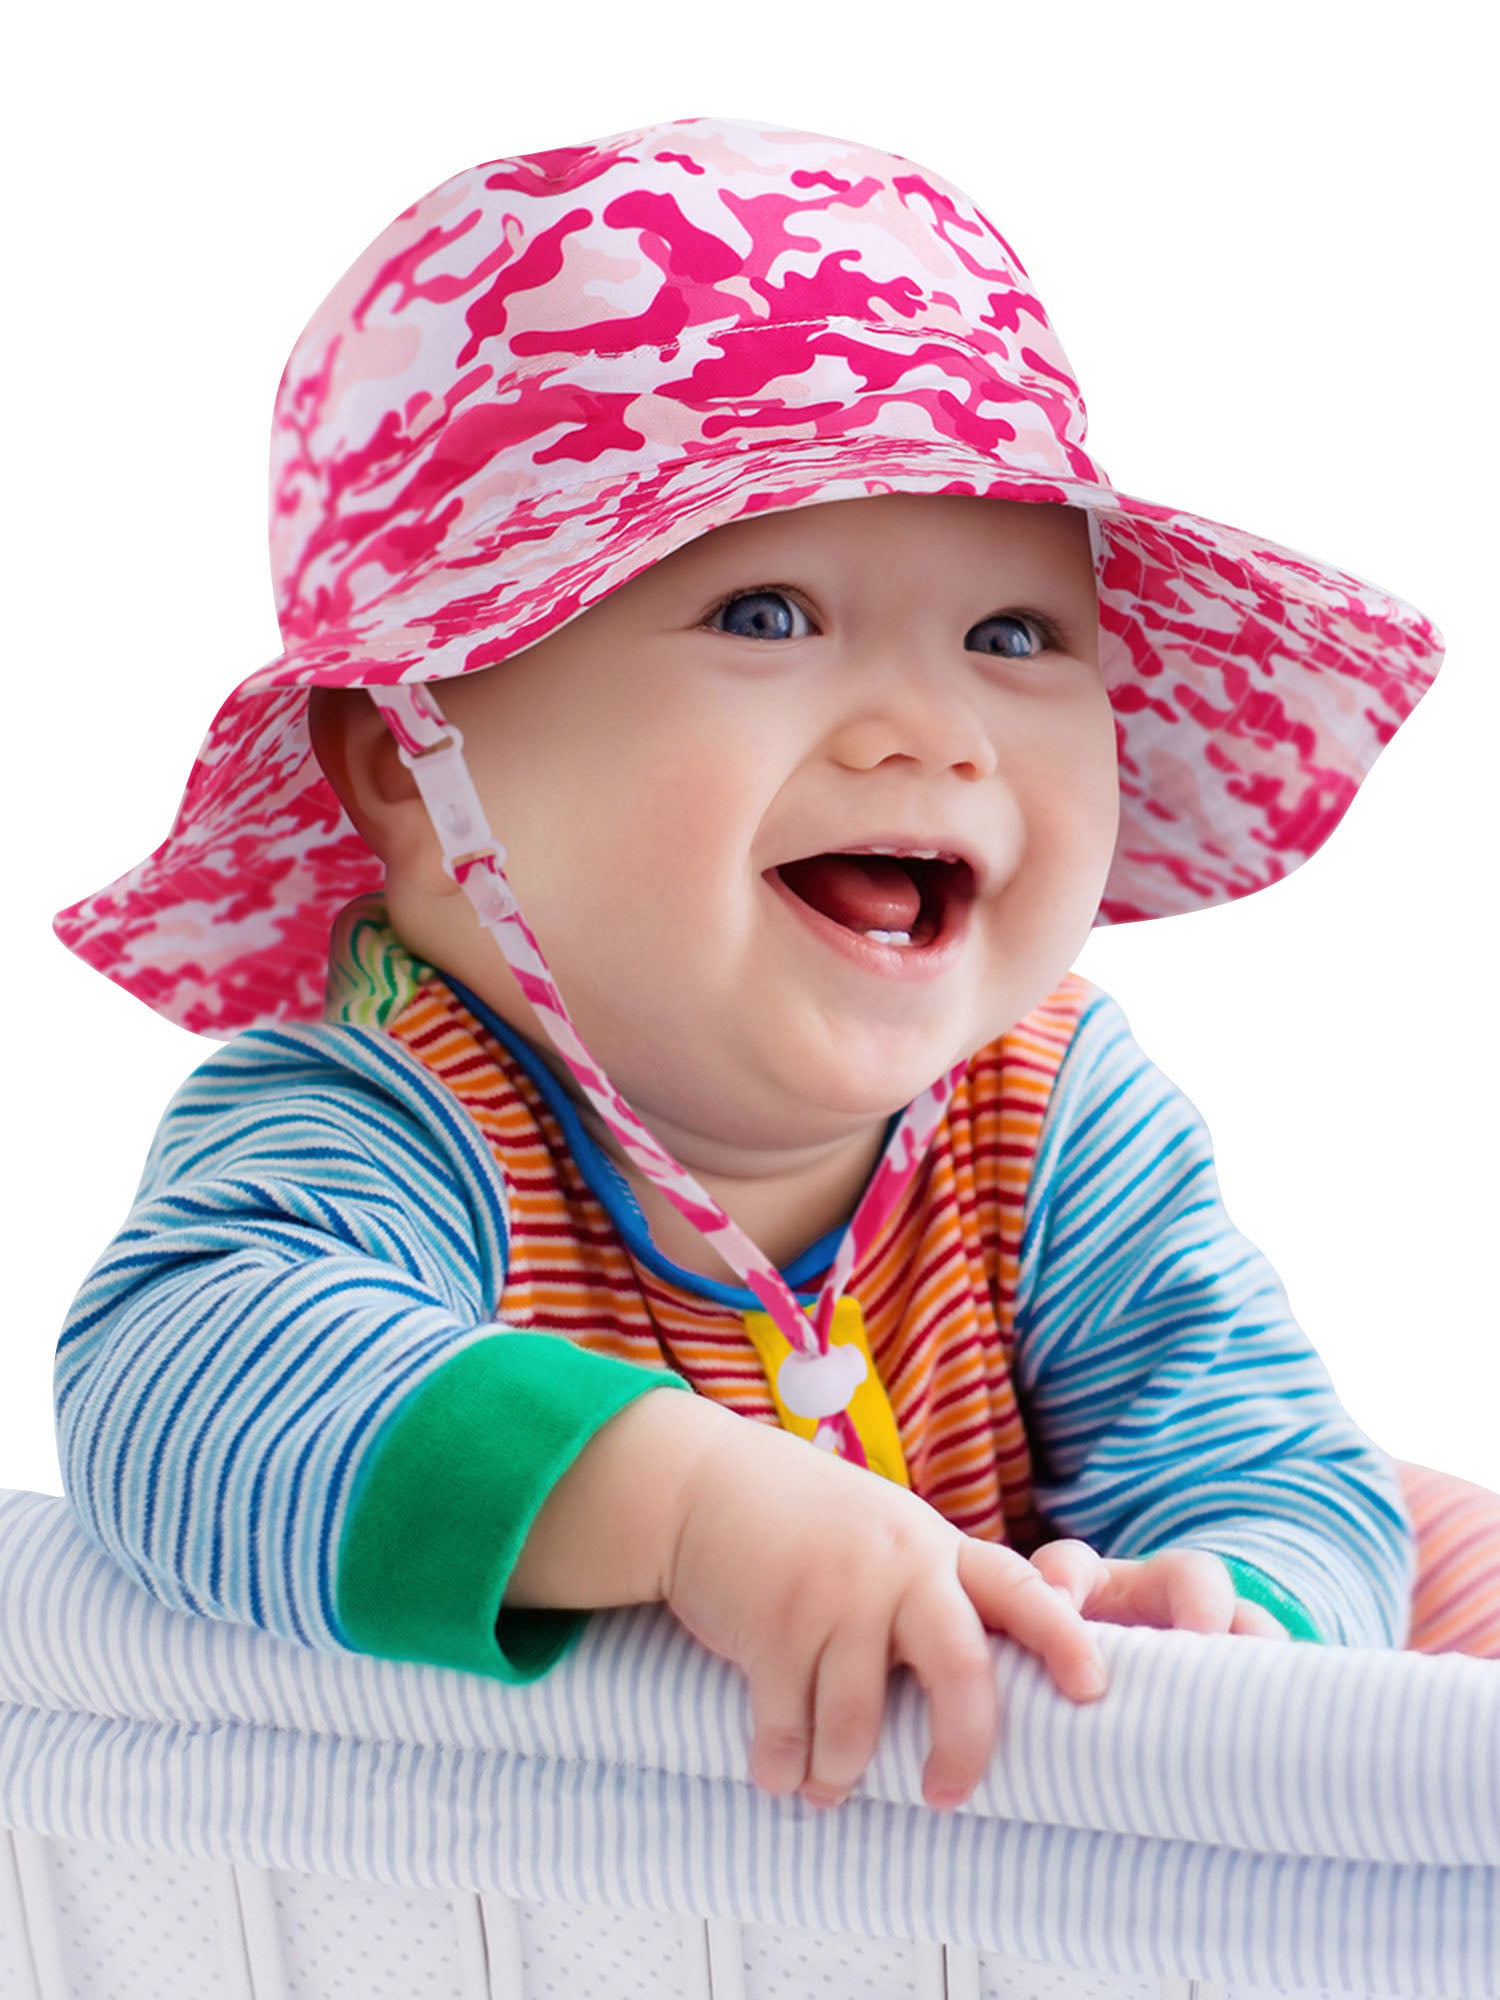 100% Cotton girls hats SUN NECK PROTECTION Summer CAP size 6-24 Months 